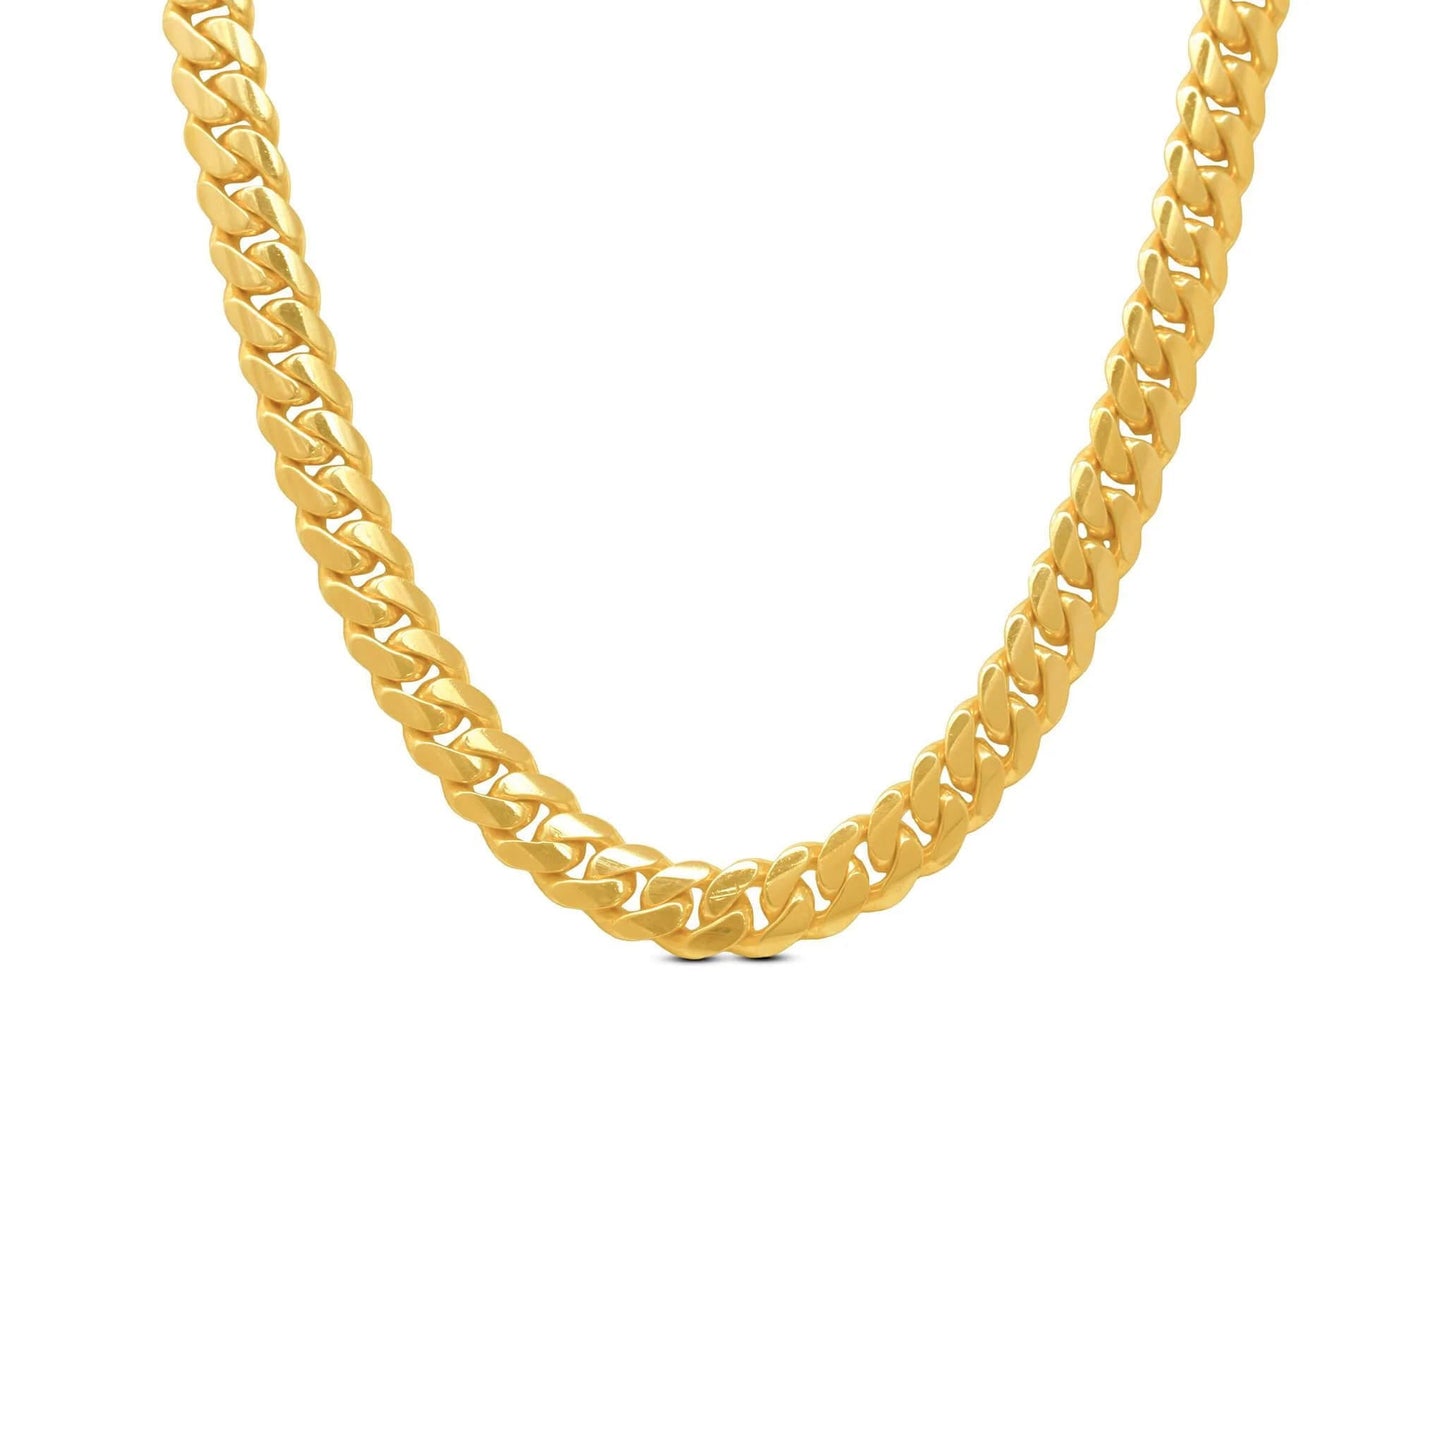 16mm Miami Cuban Link Chain in 10K Solid Yellow Gold - Vera Jewelry in Miami